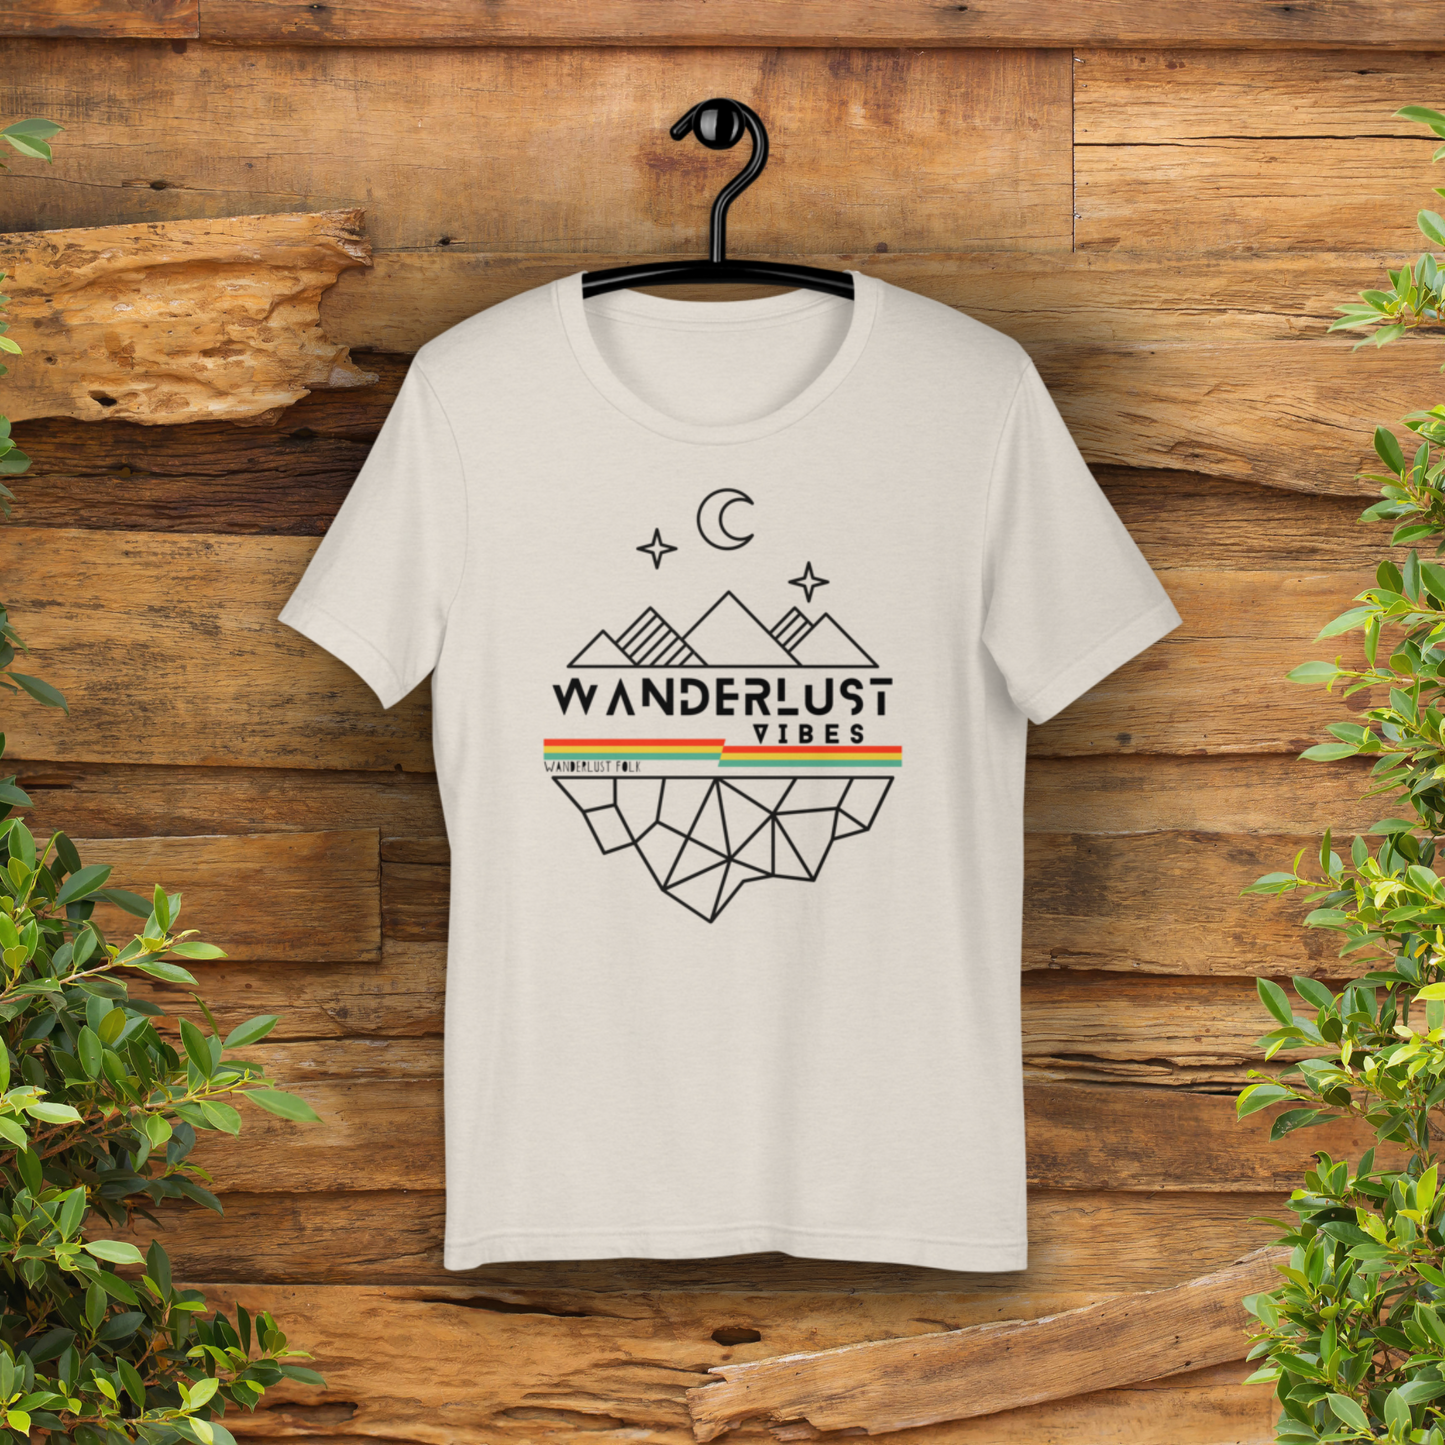 Wanderlust Vibes | Unisex t-shirt